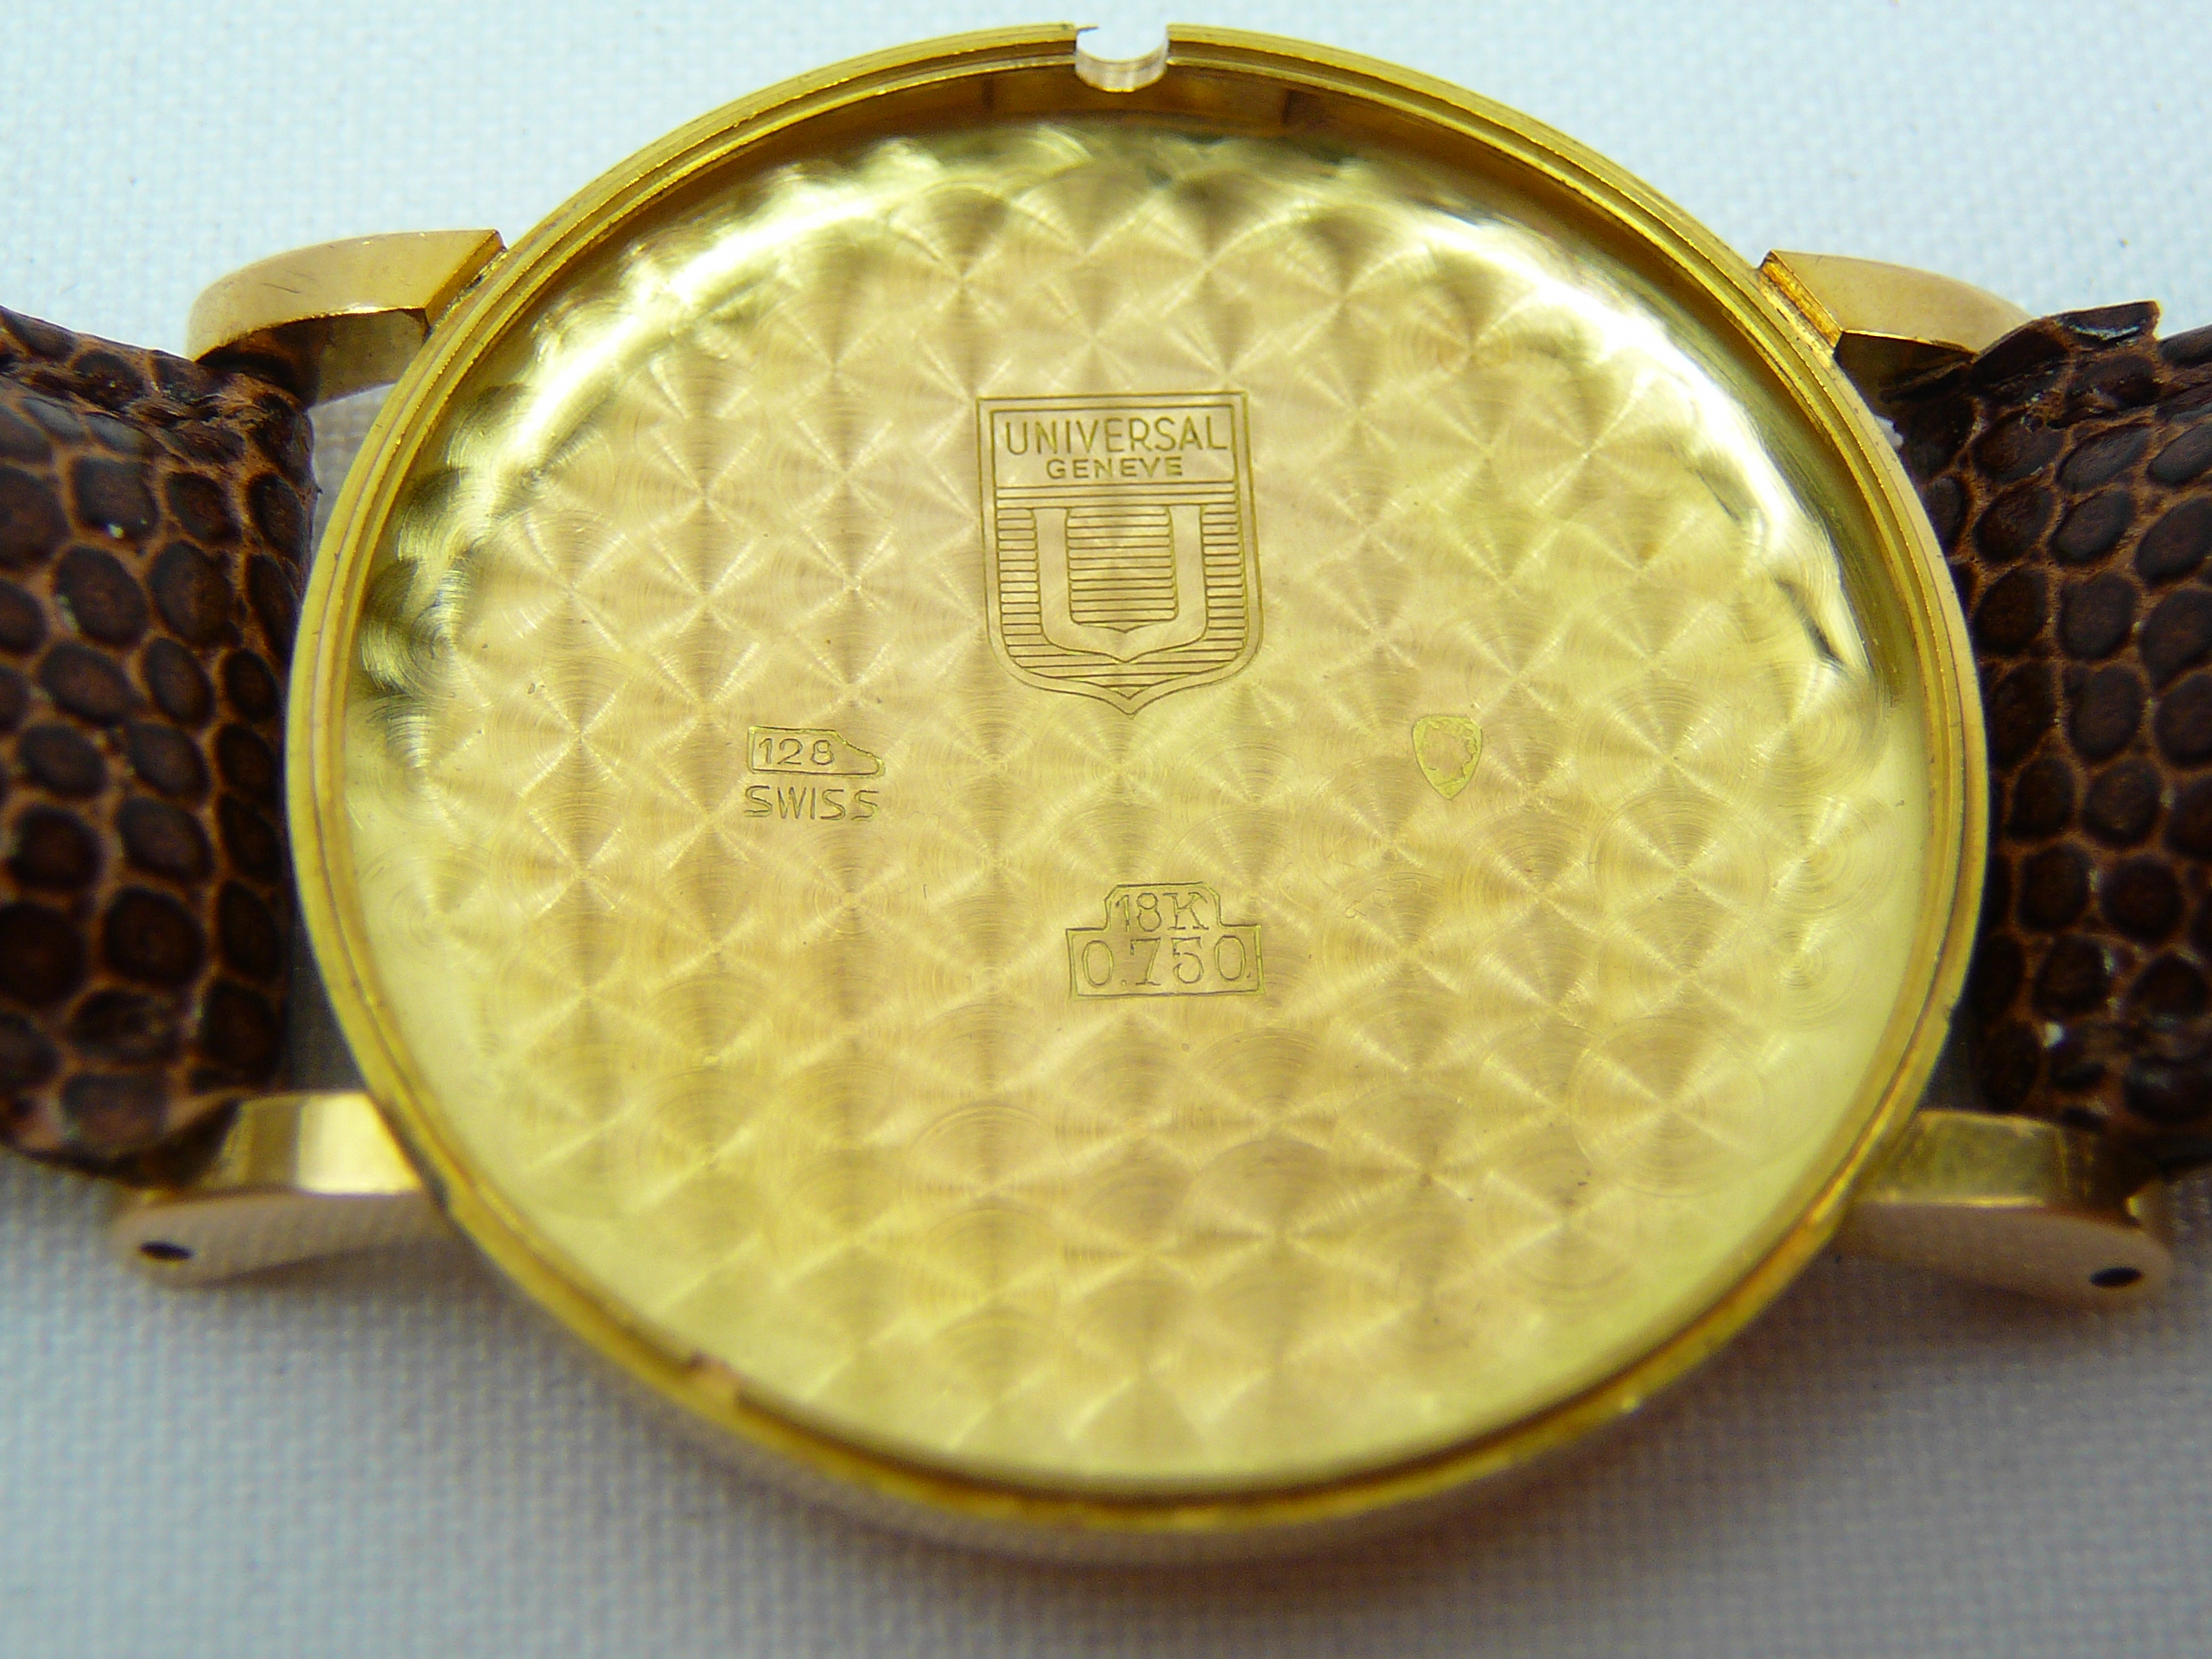 Gents Vintage Gold Universal Wrist Watch - Image 6 of 9